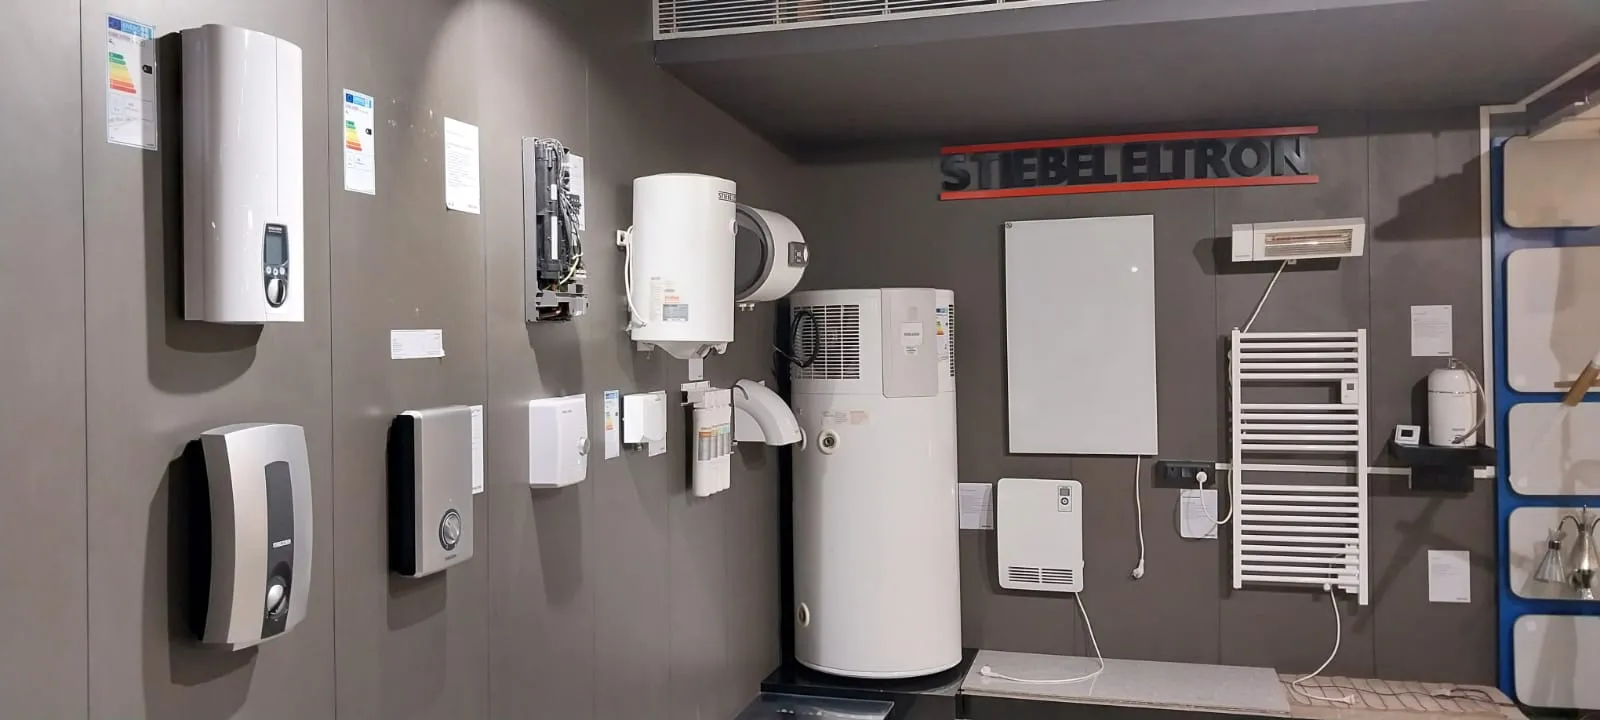 Steibel Eltron display with their white heat pump